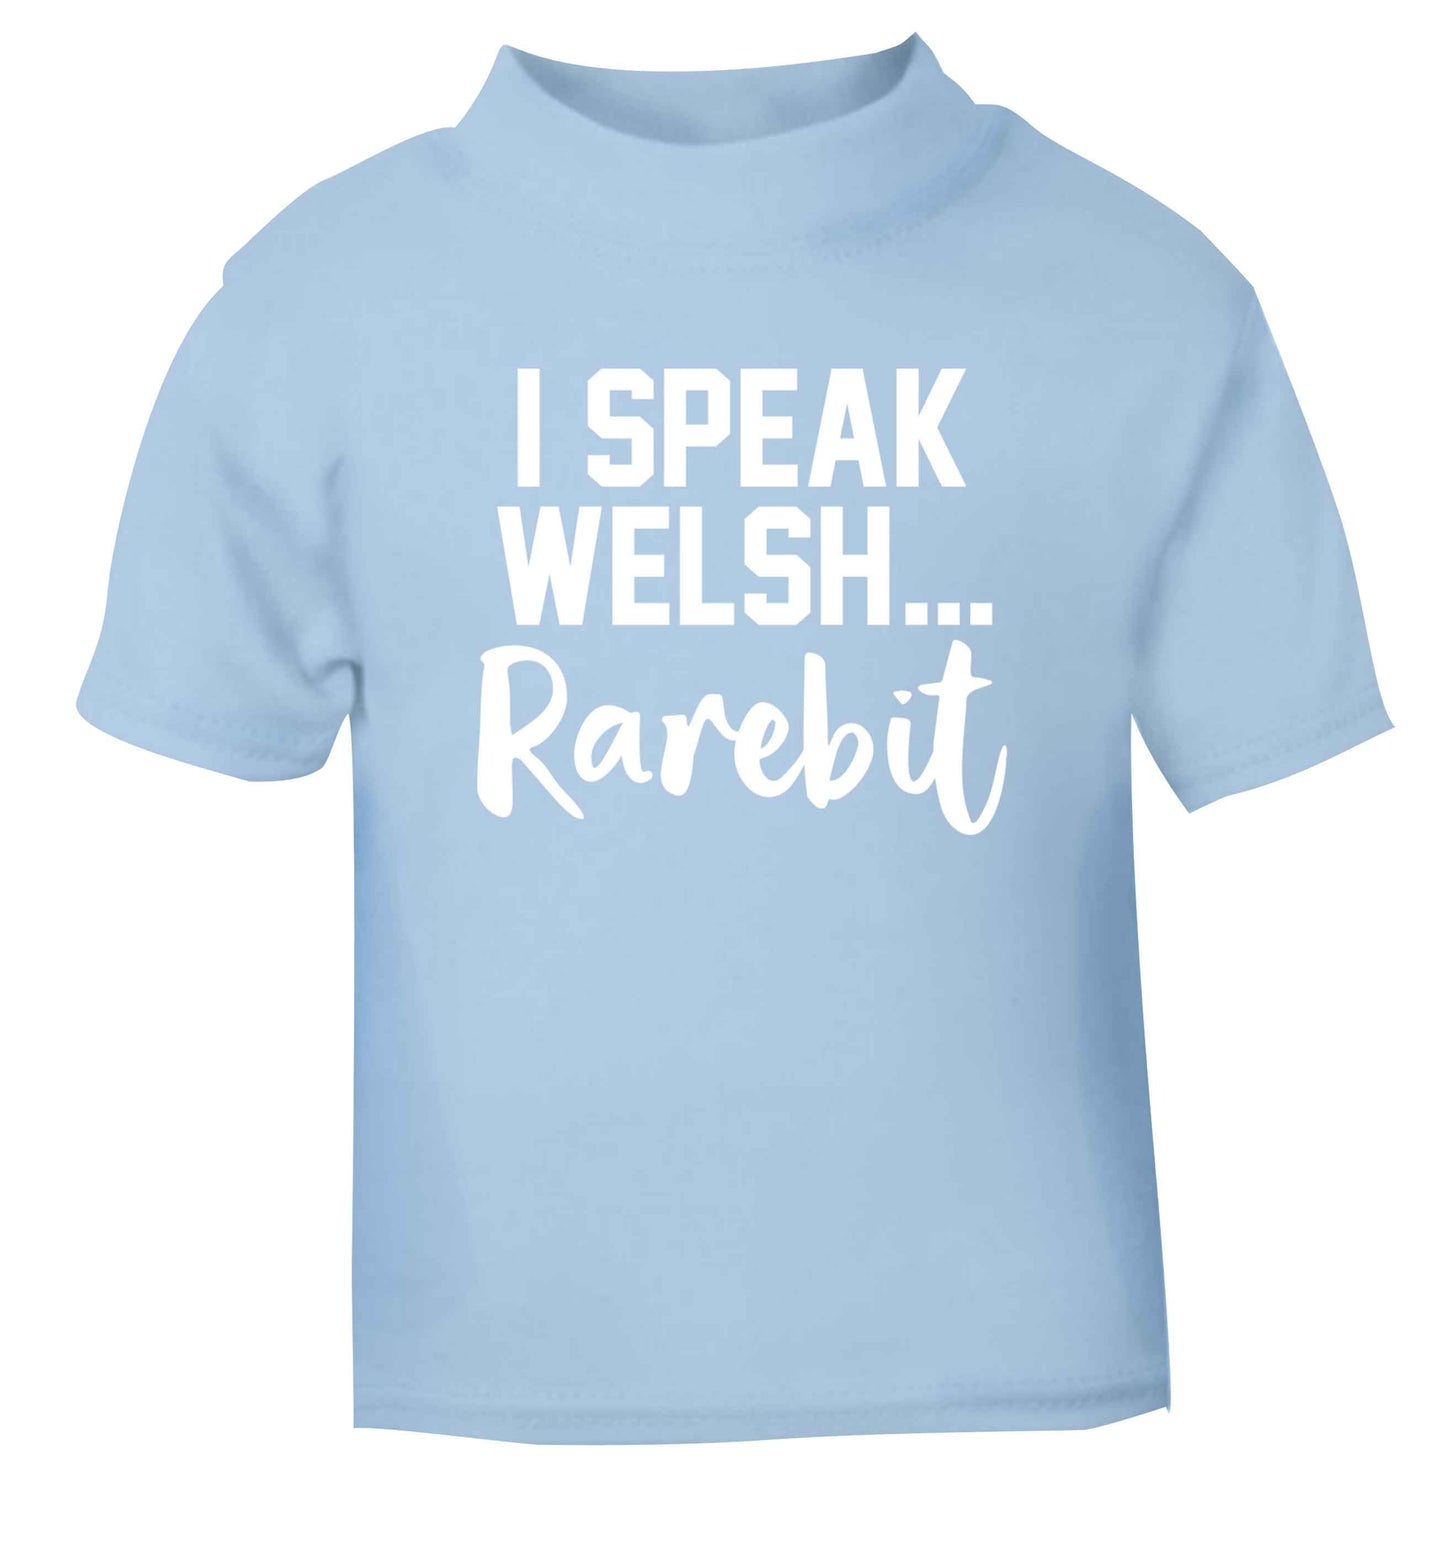 I speak Welsh...rarebit light blue Baby Toddler Tshirt 2 Years